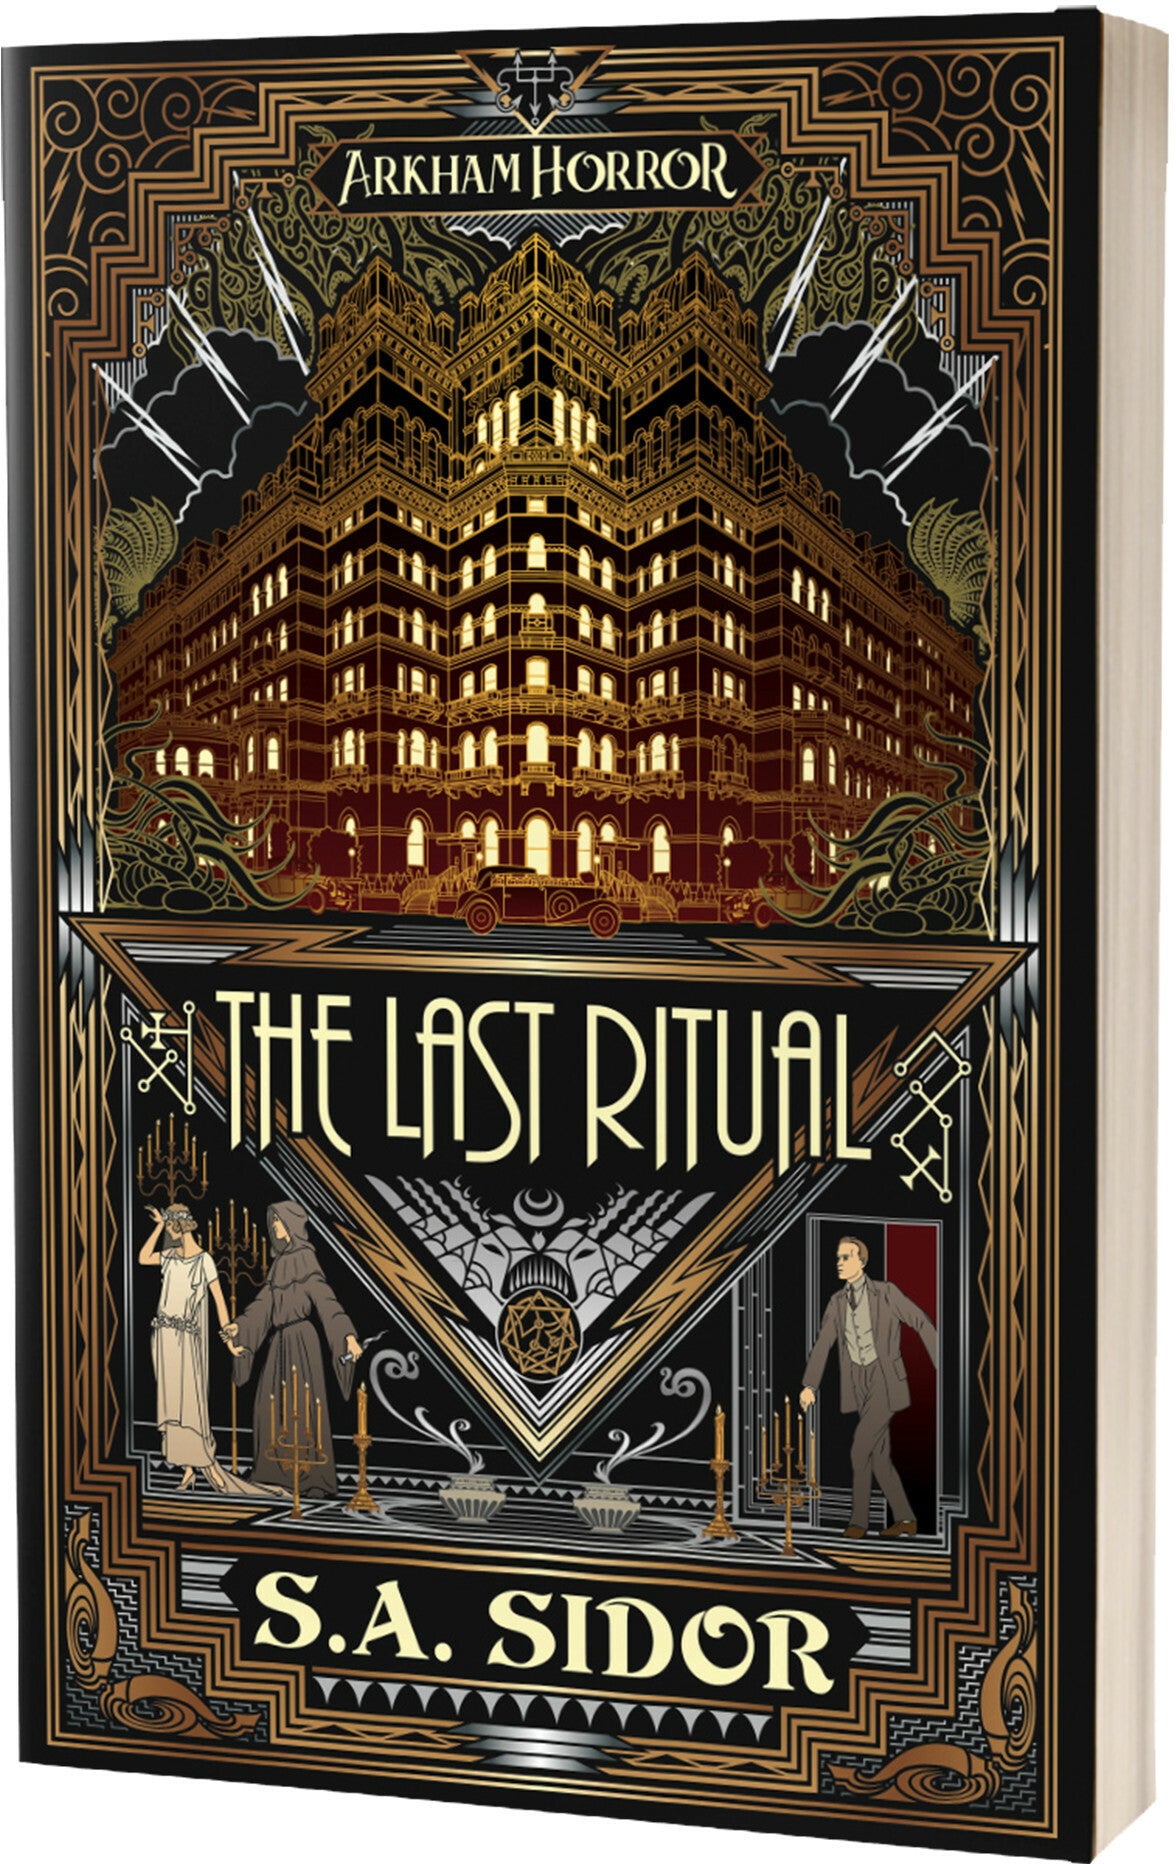 Arkham Horror: The Last Ritual Novel